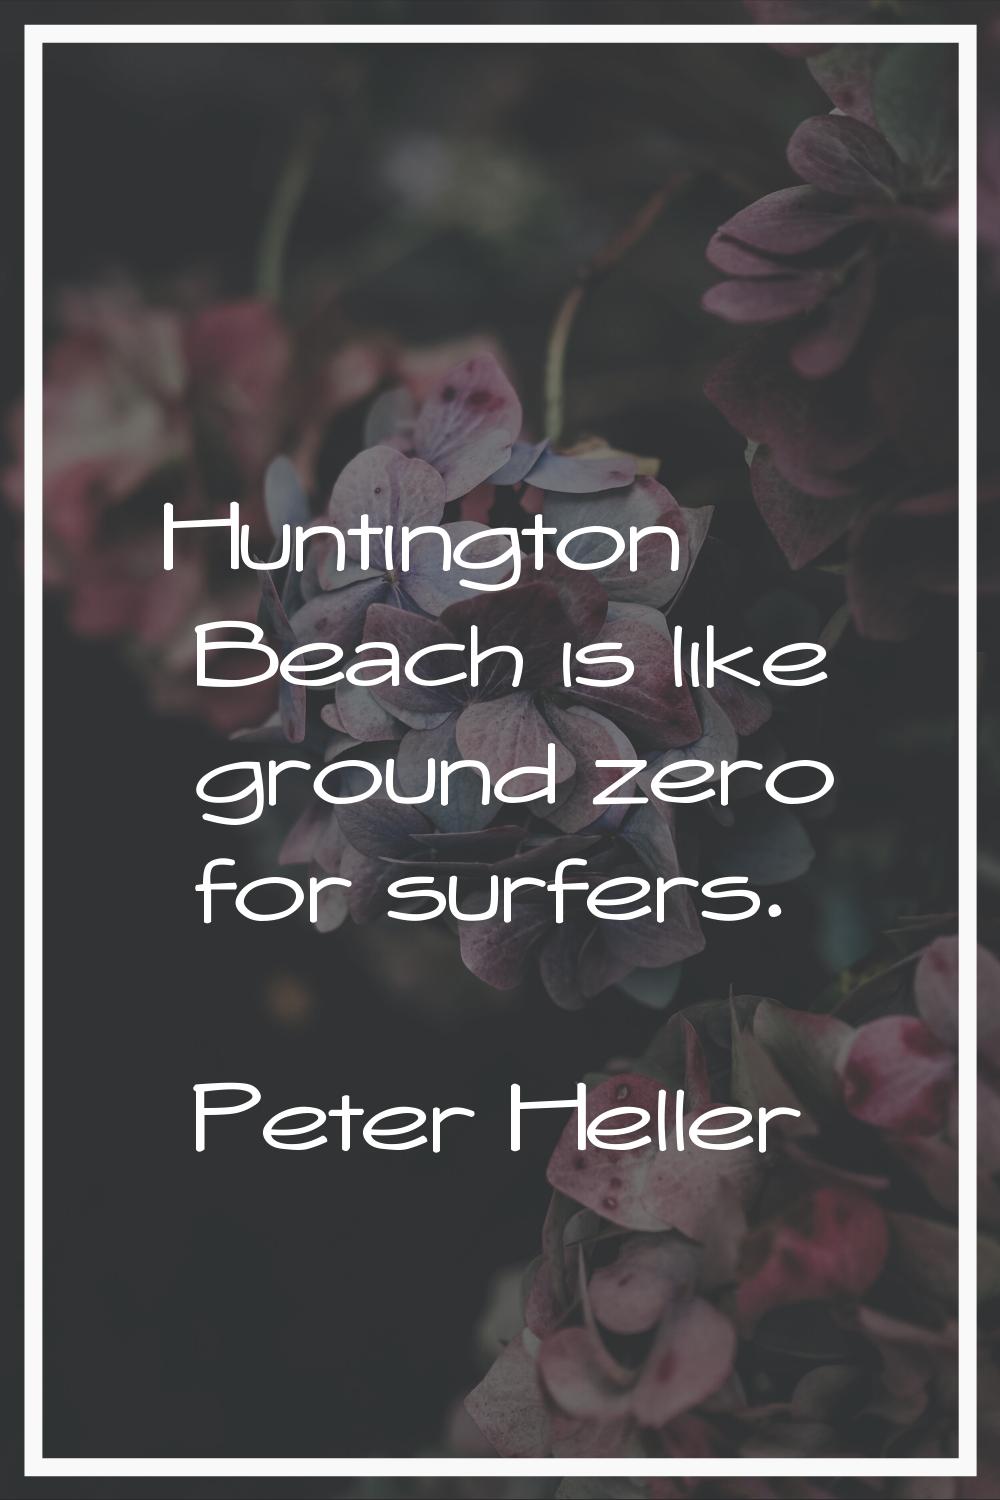 Huntington Beach is like ground zero for surfers.